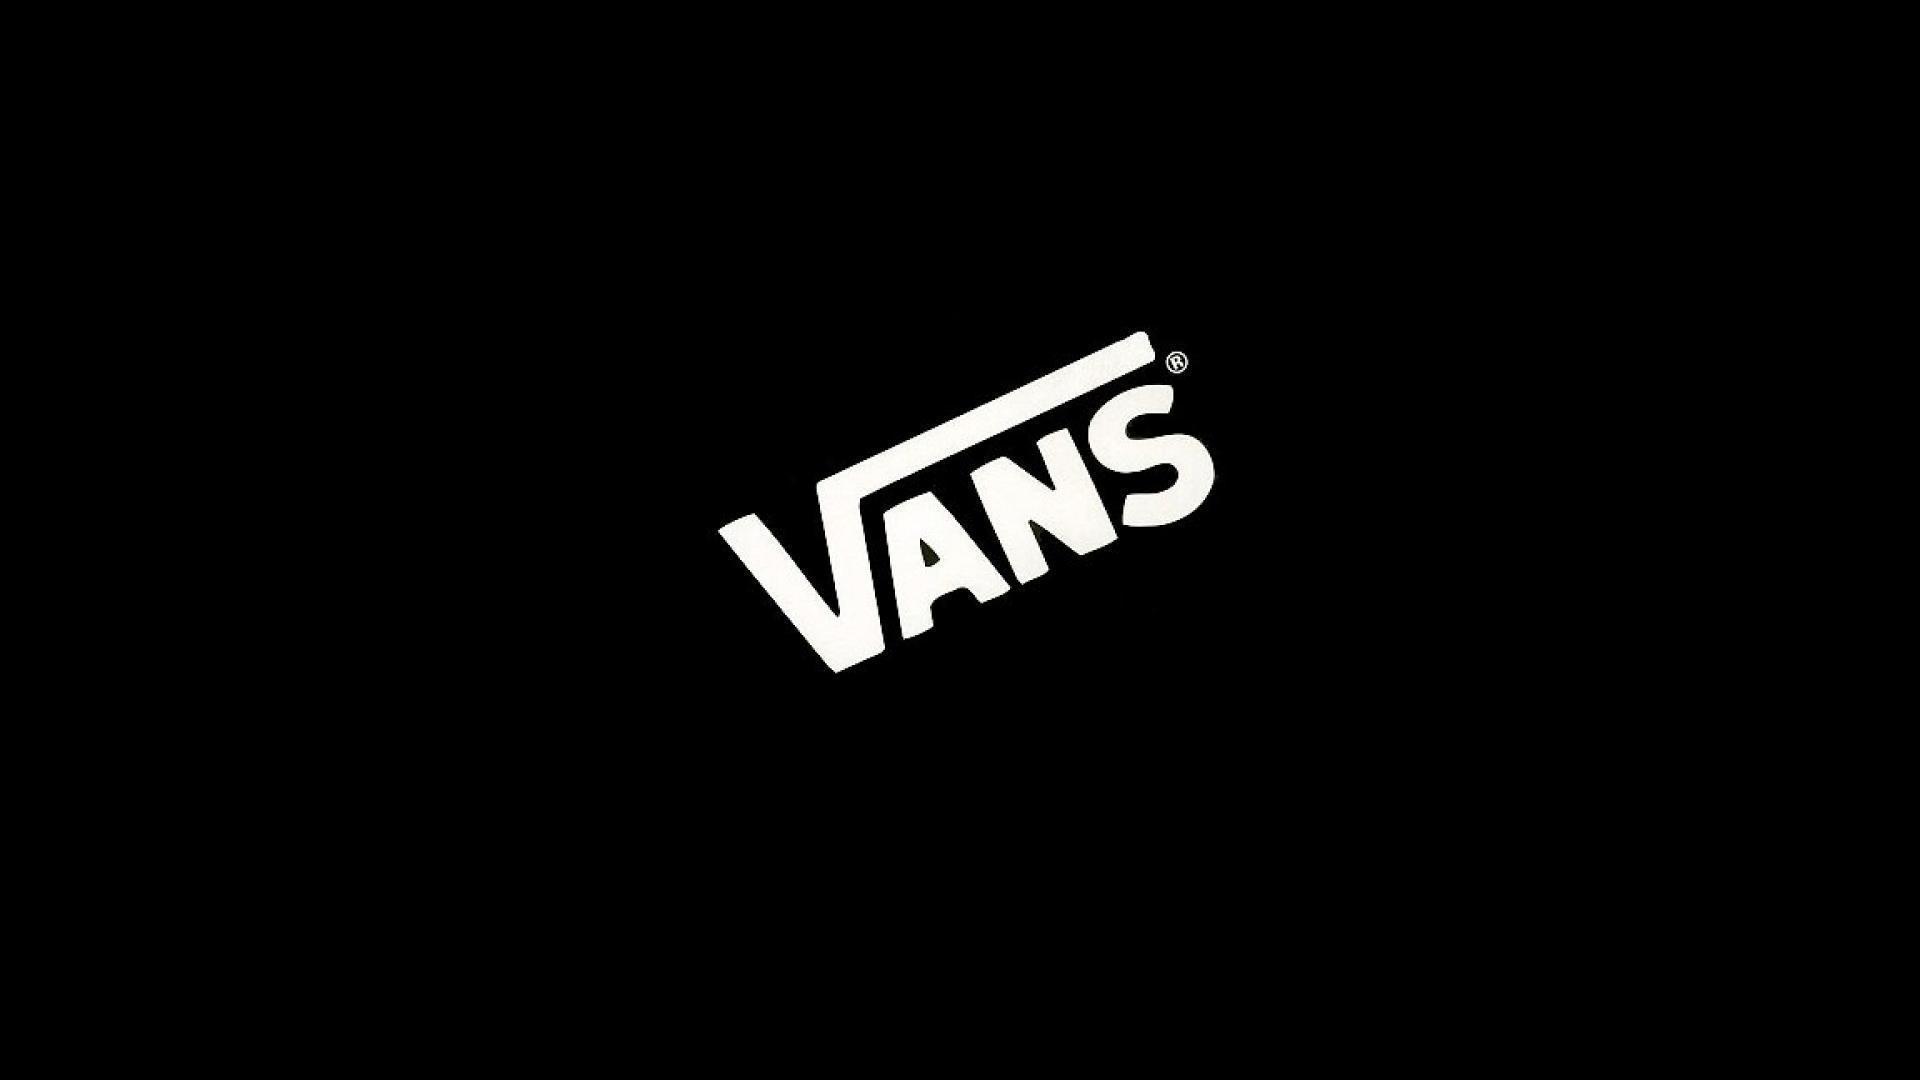 wallpaper vans logo